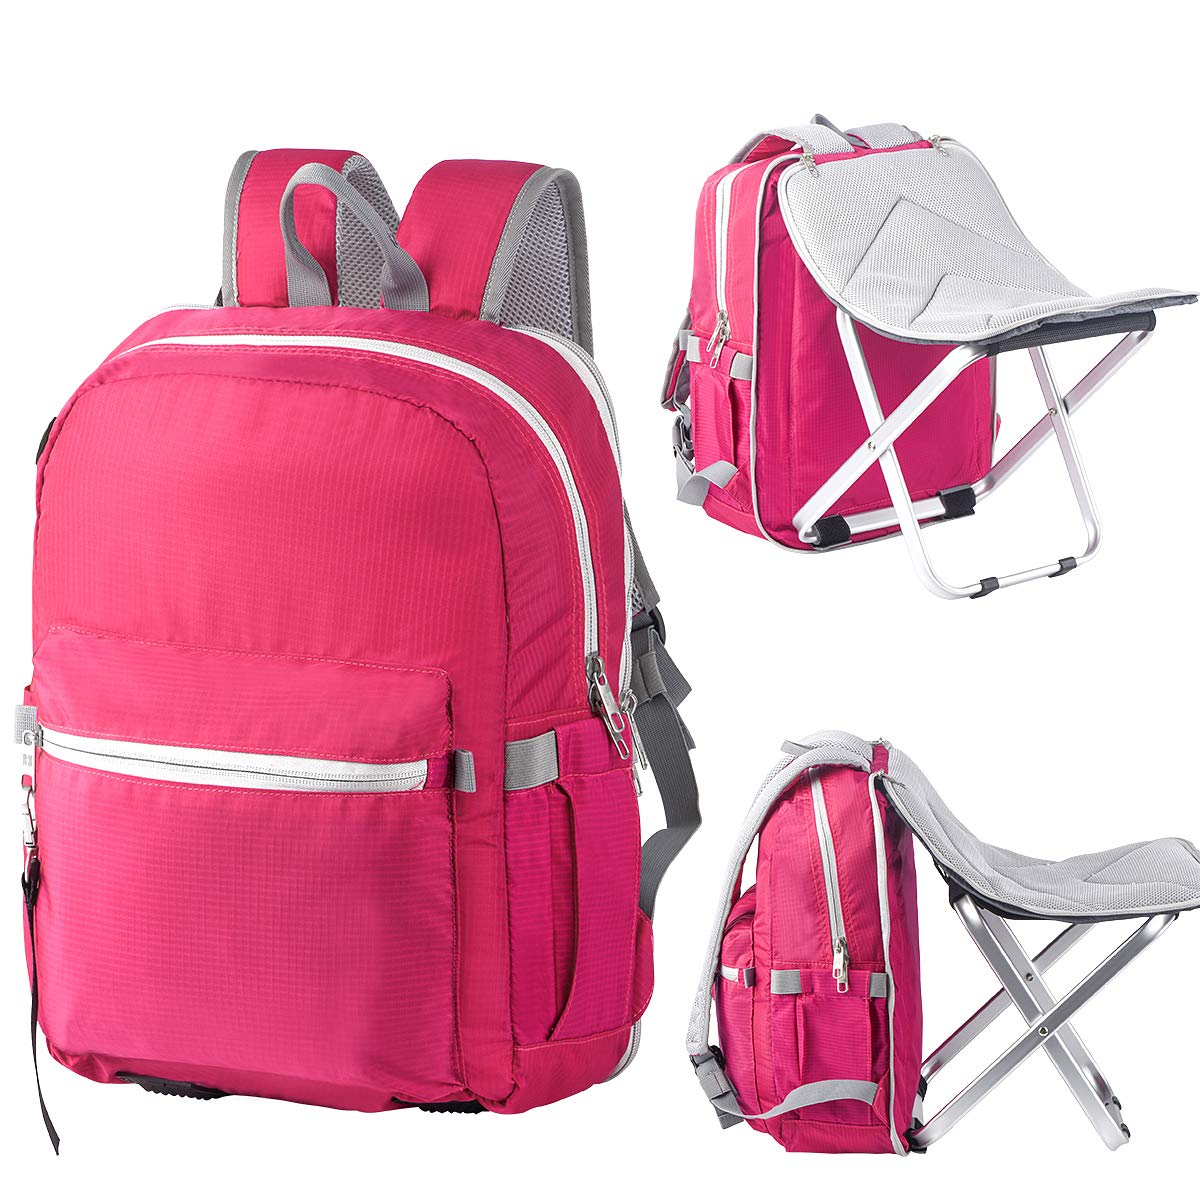 Backpack Stool Combo - Detachable Portable Folding Chair